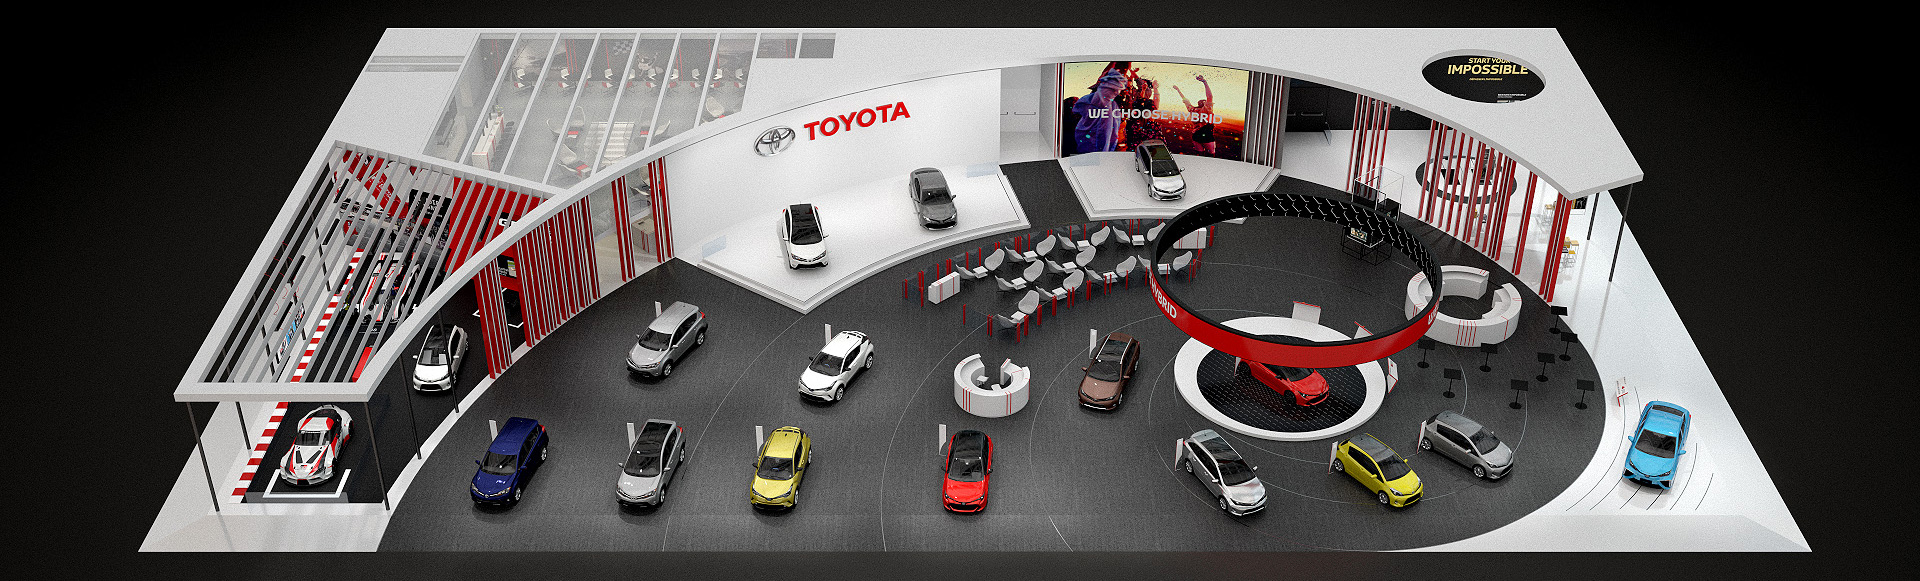 Innovative Toyota at Paris Motor Show